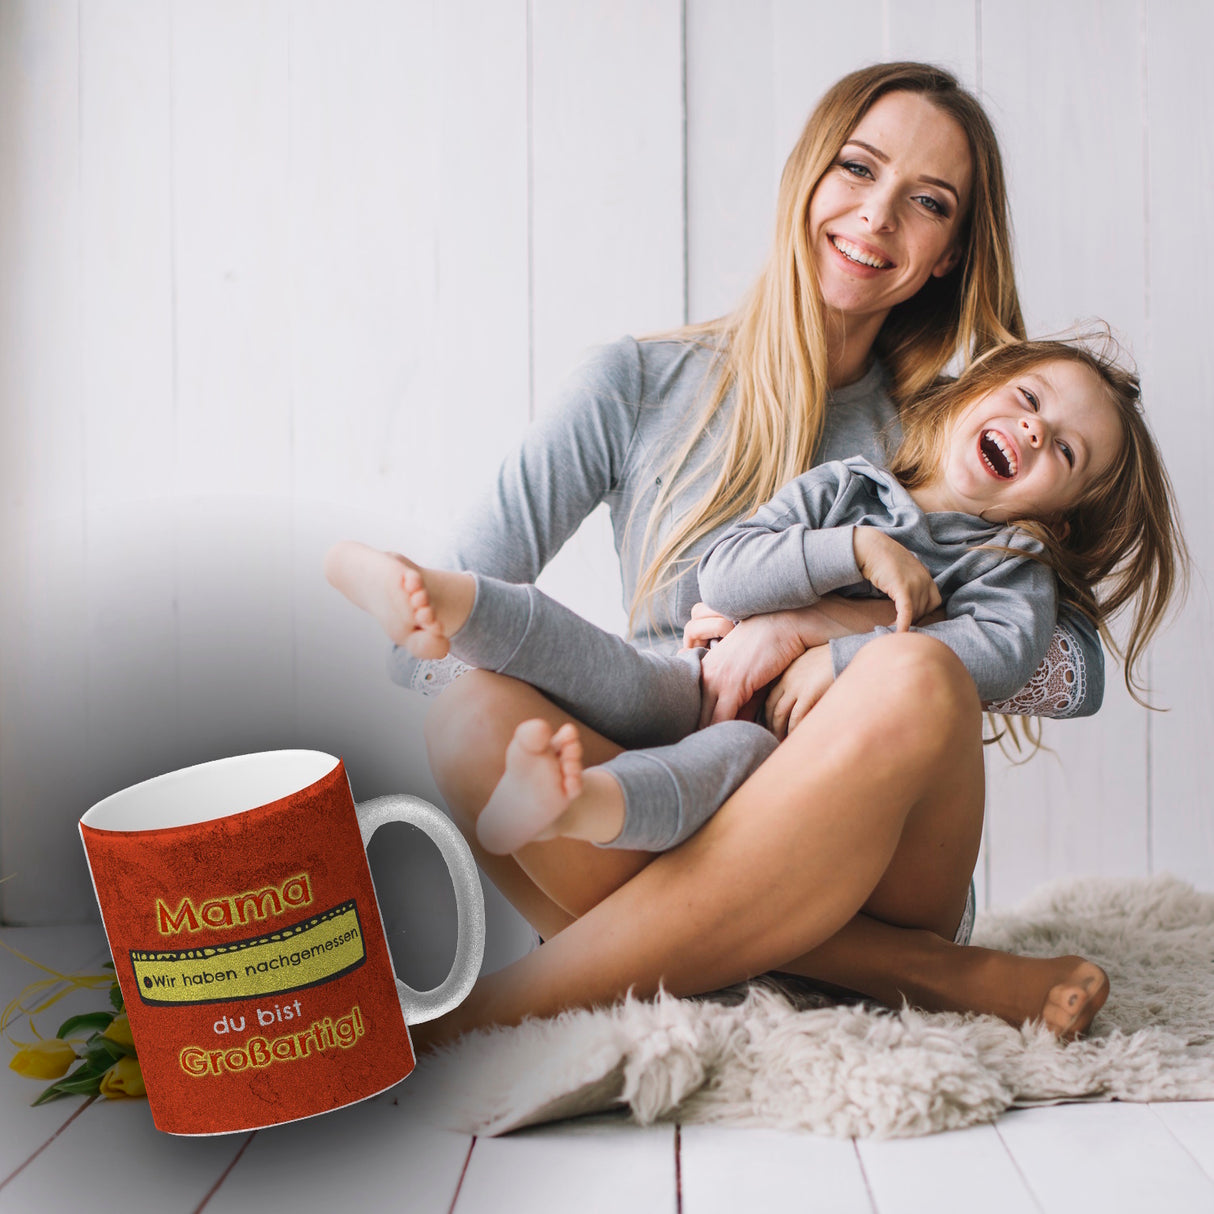 Kaffeebecher Mama du bist großartig - Meterstab Muttertag Geschenk